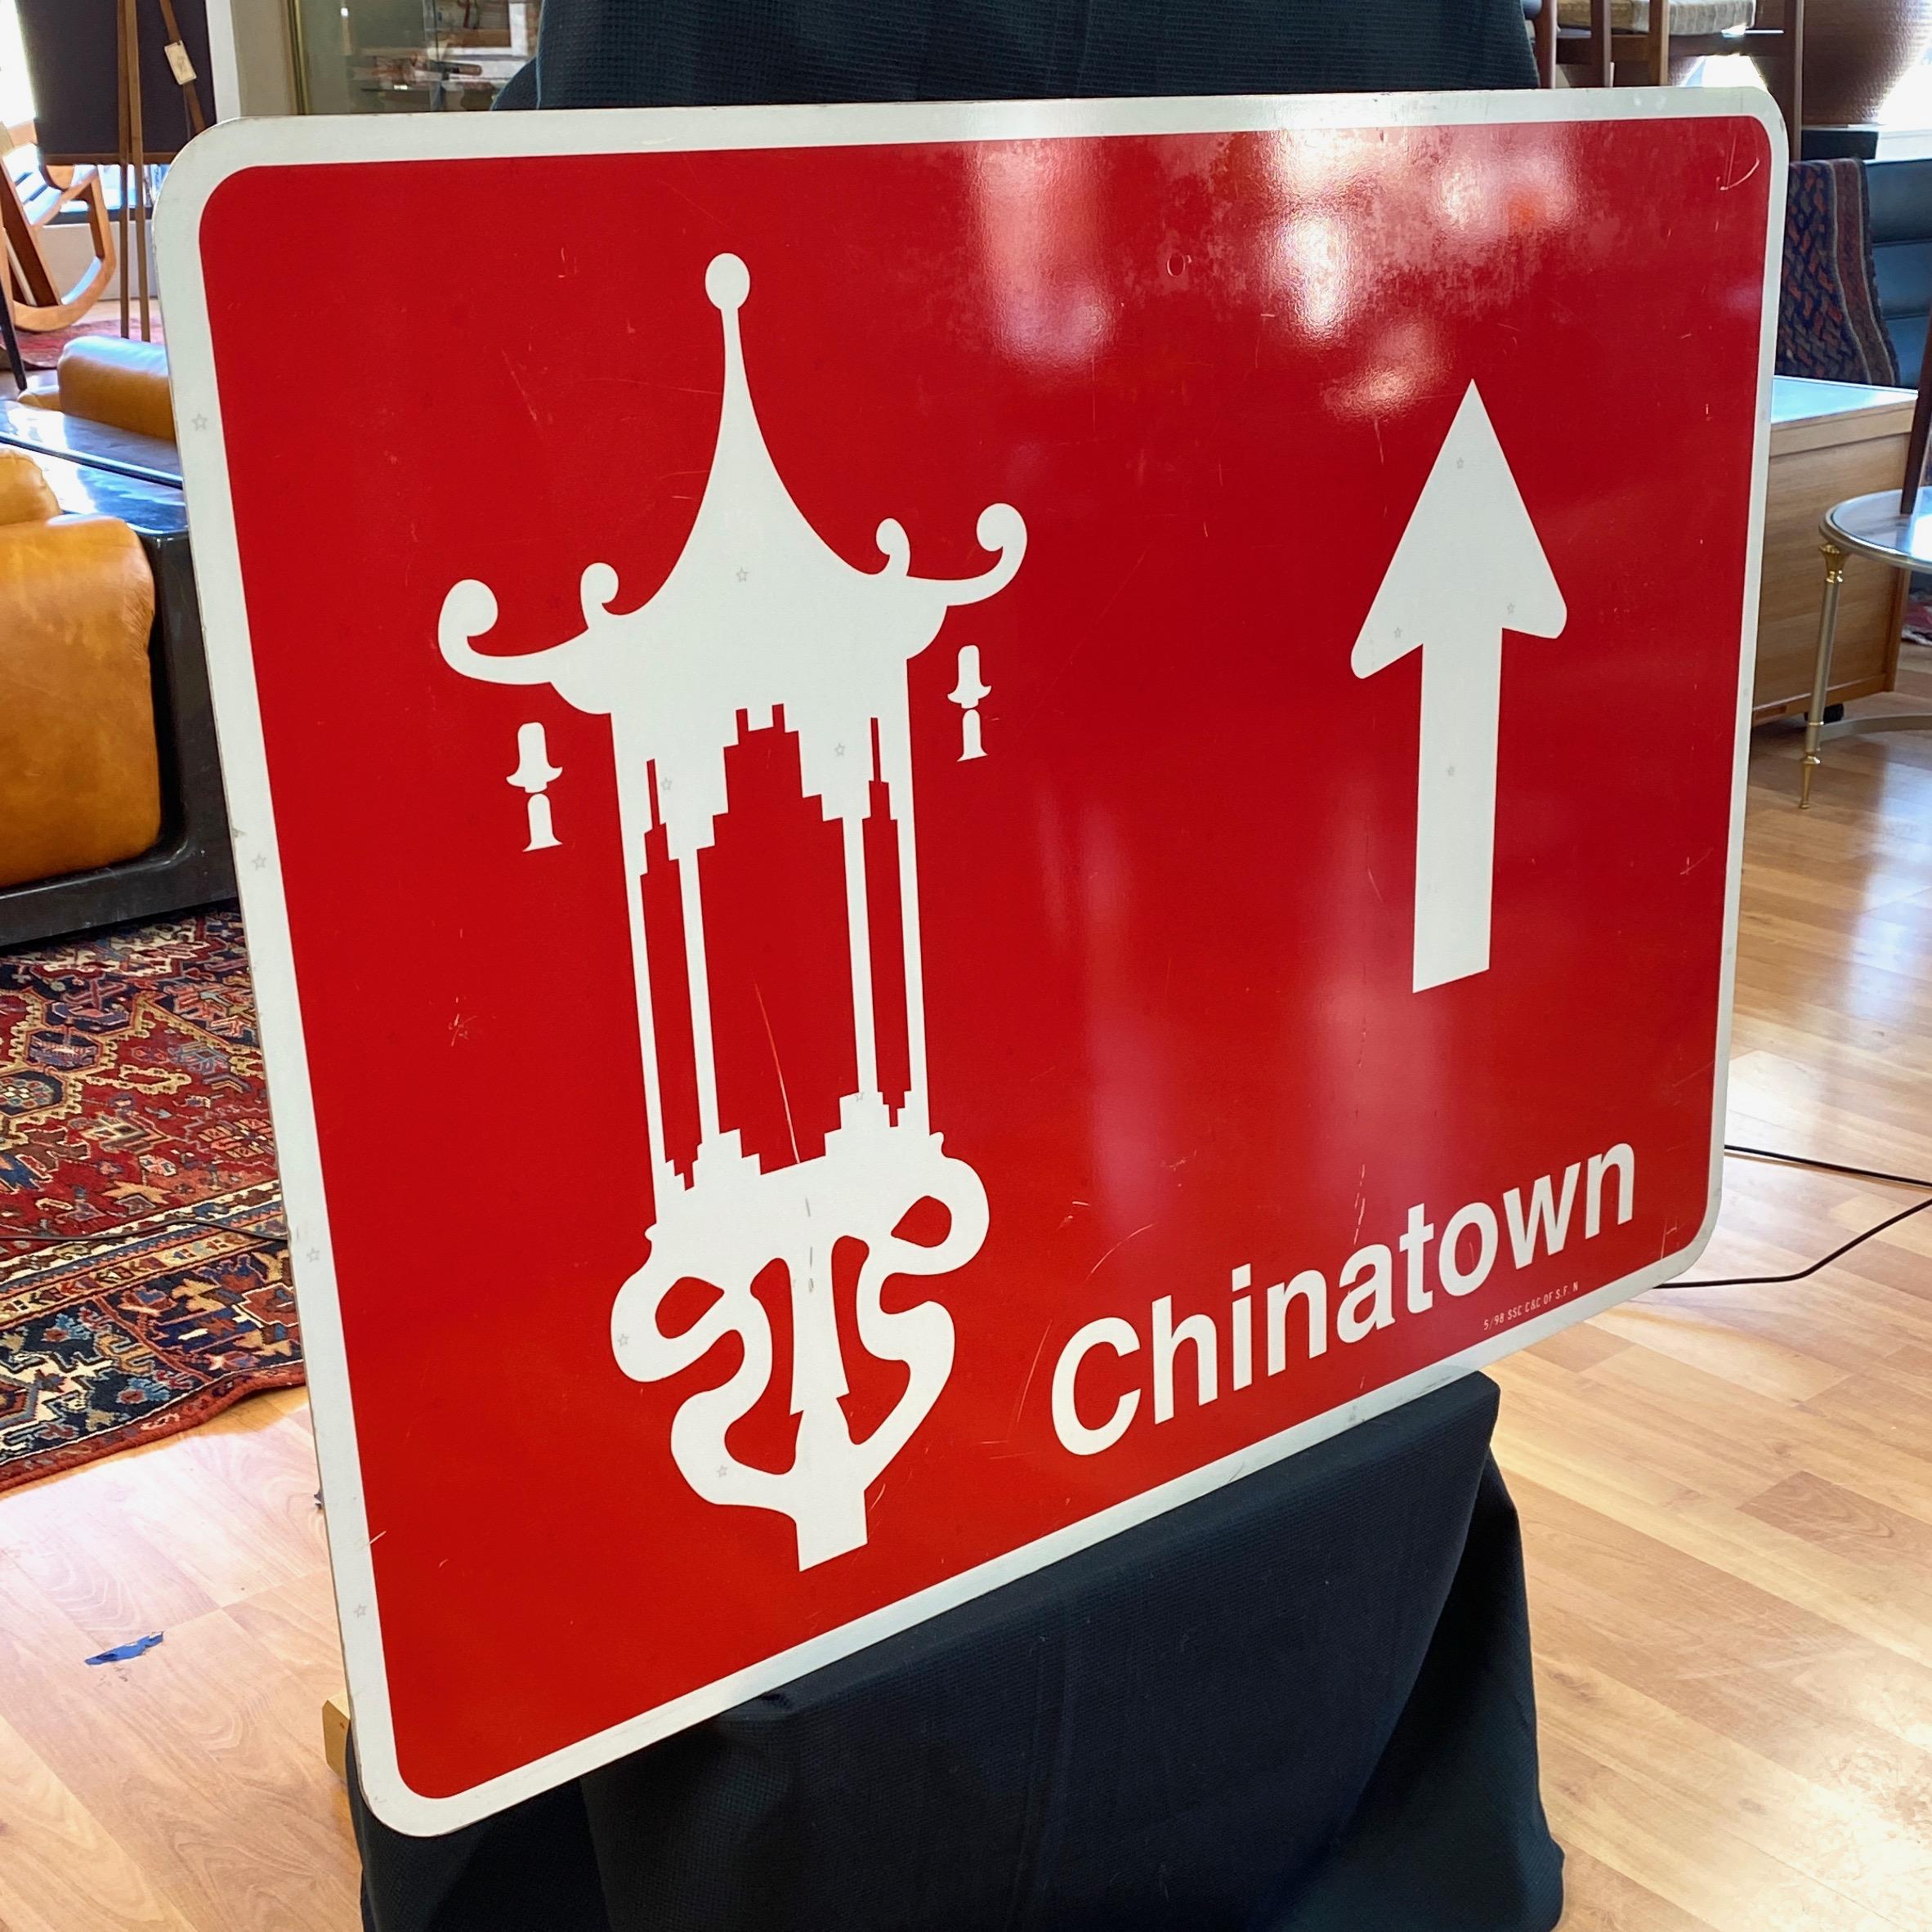 china town sign